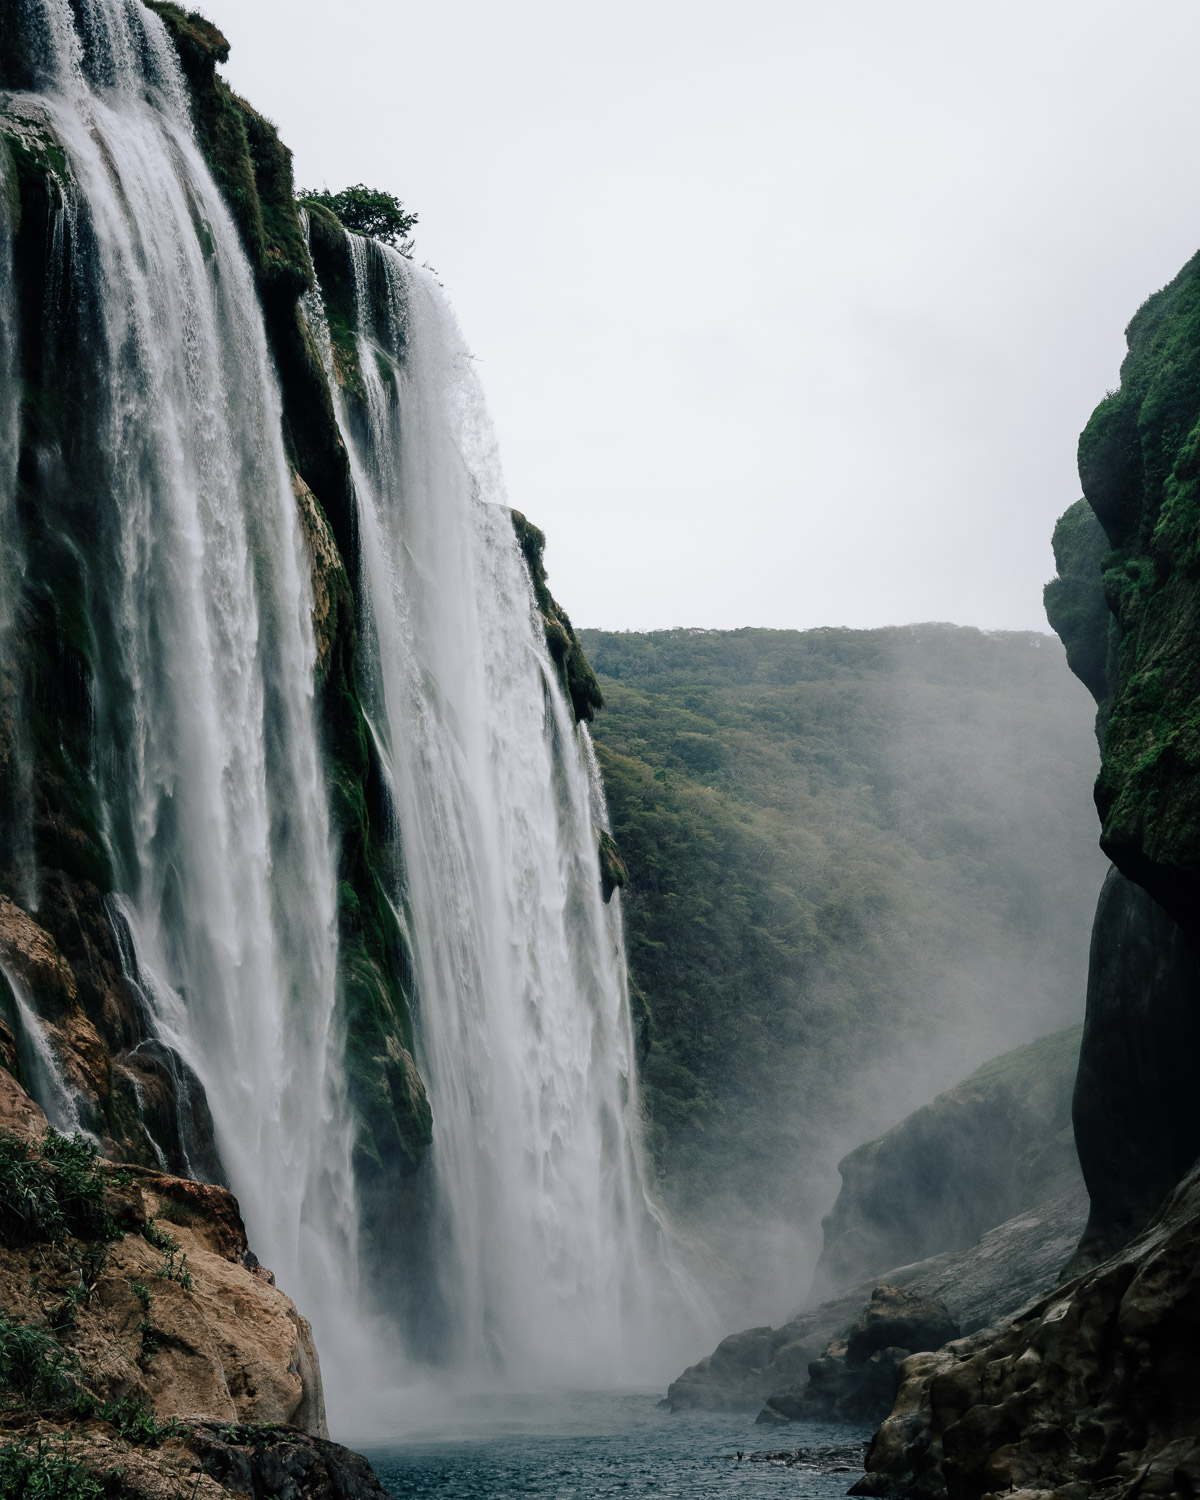 Cascada Tamul, the most impressive waterfall of the Huasteca Potosina